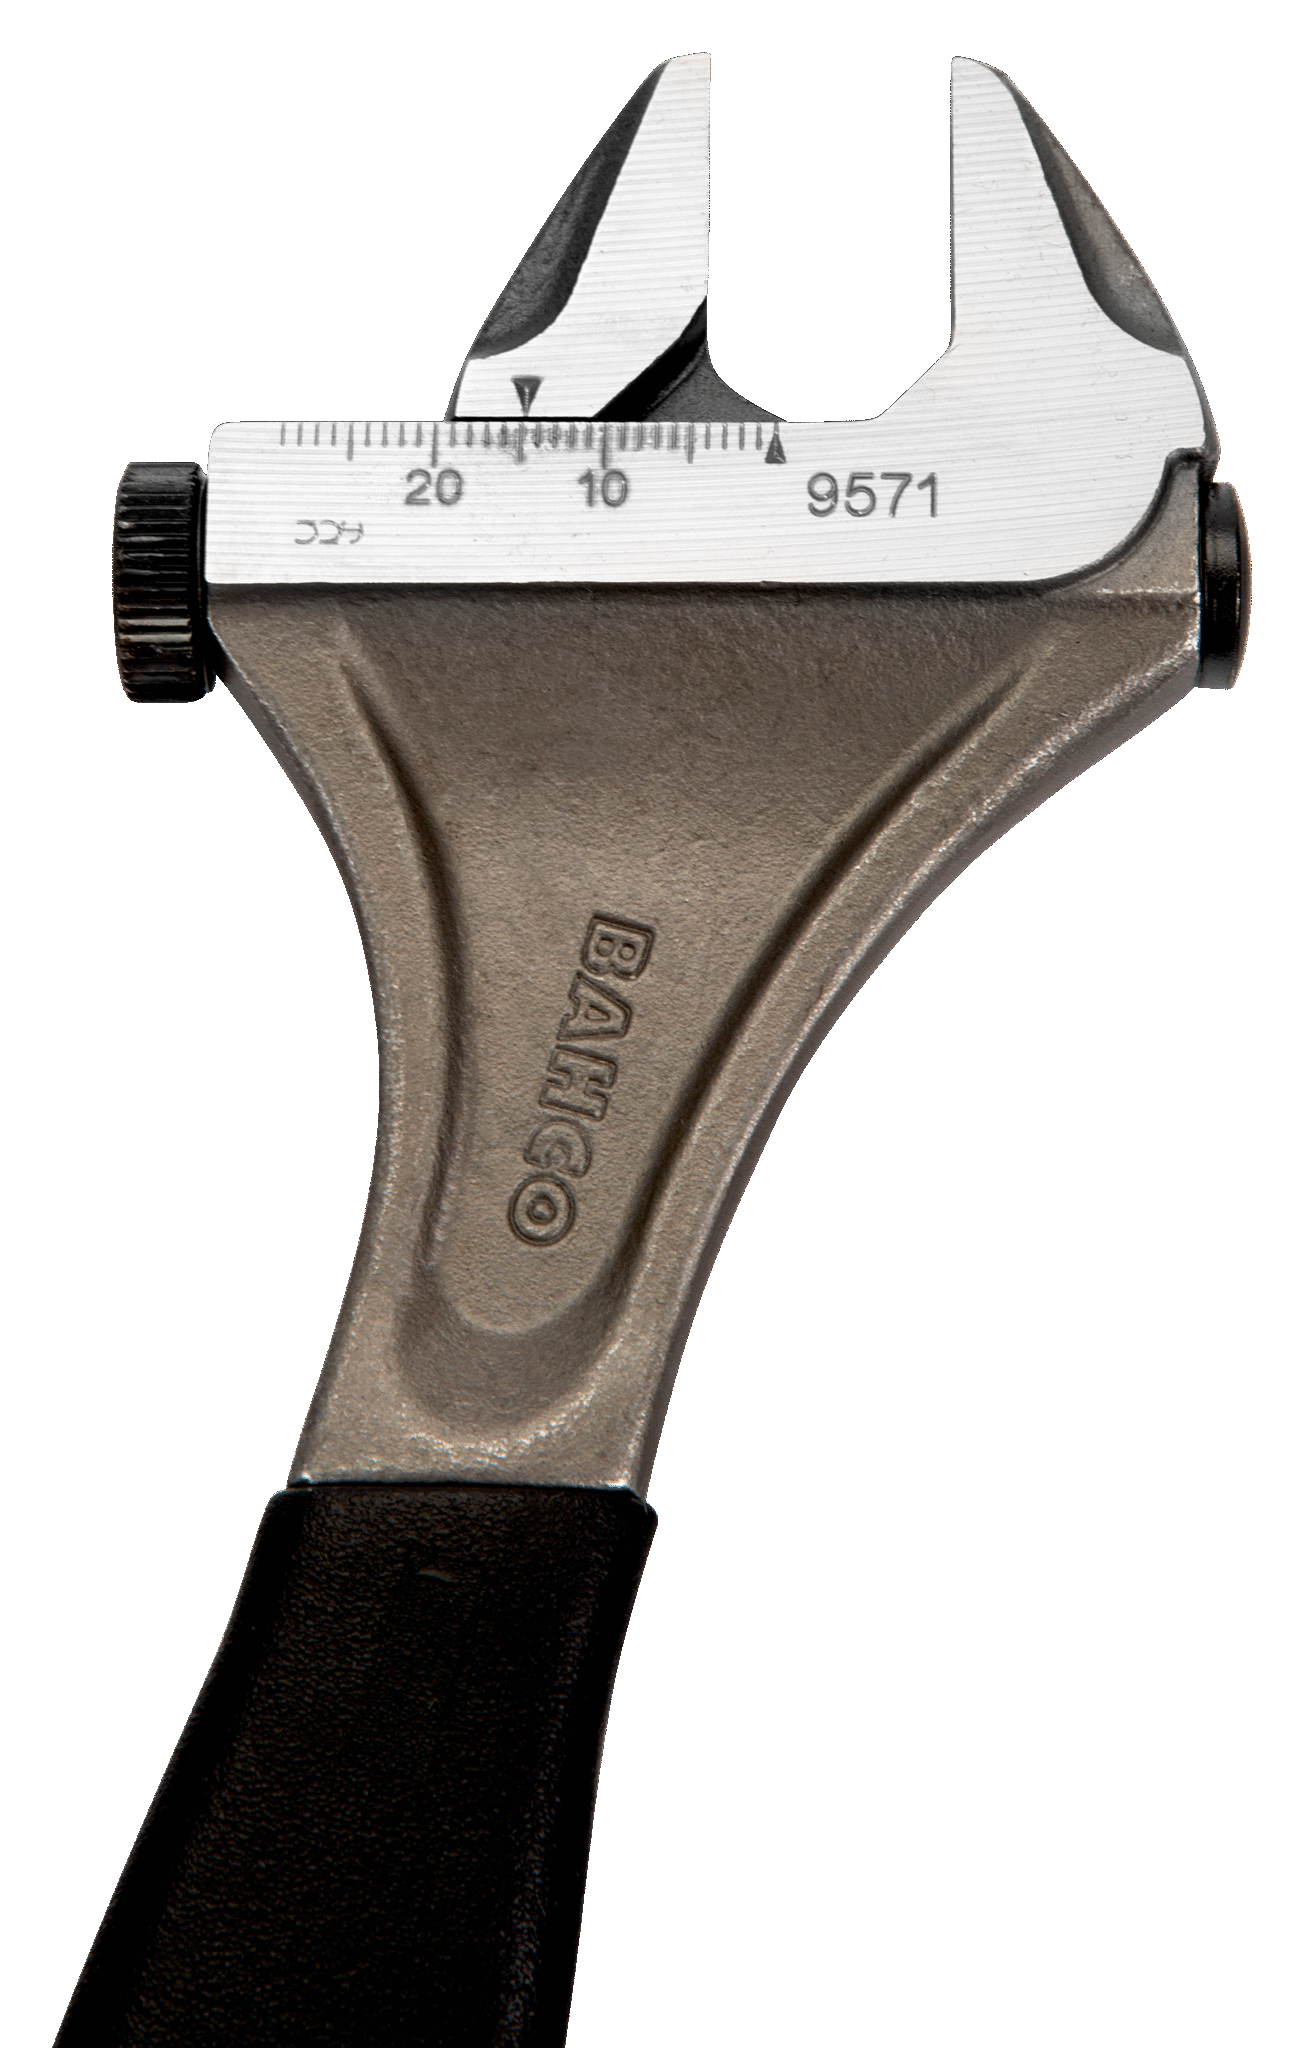 картинка Разводной ключ с регулировкой зева с торца BAHCO 9572 от магазина "Элит-инструмент"